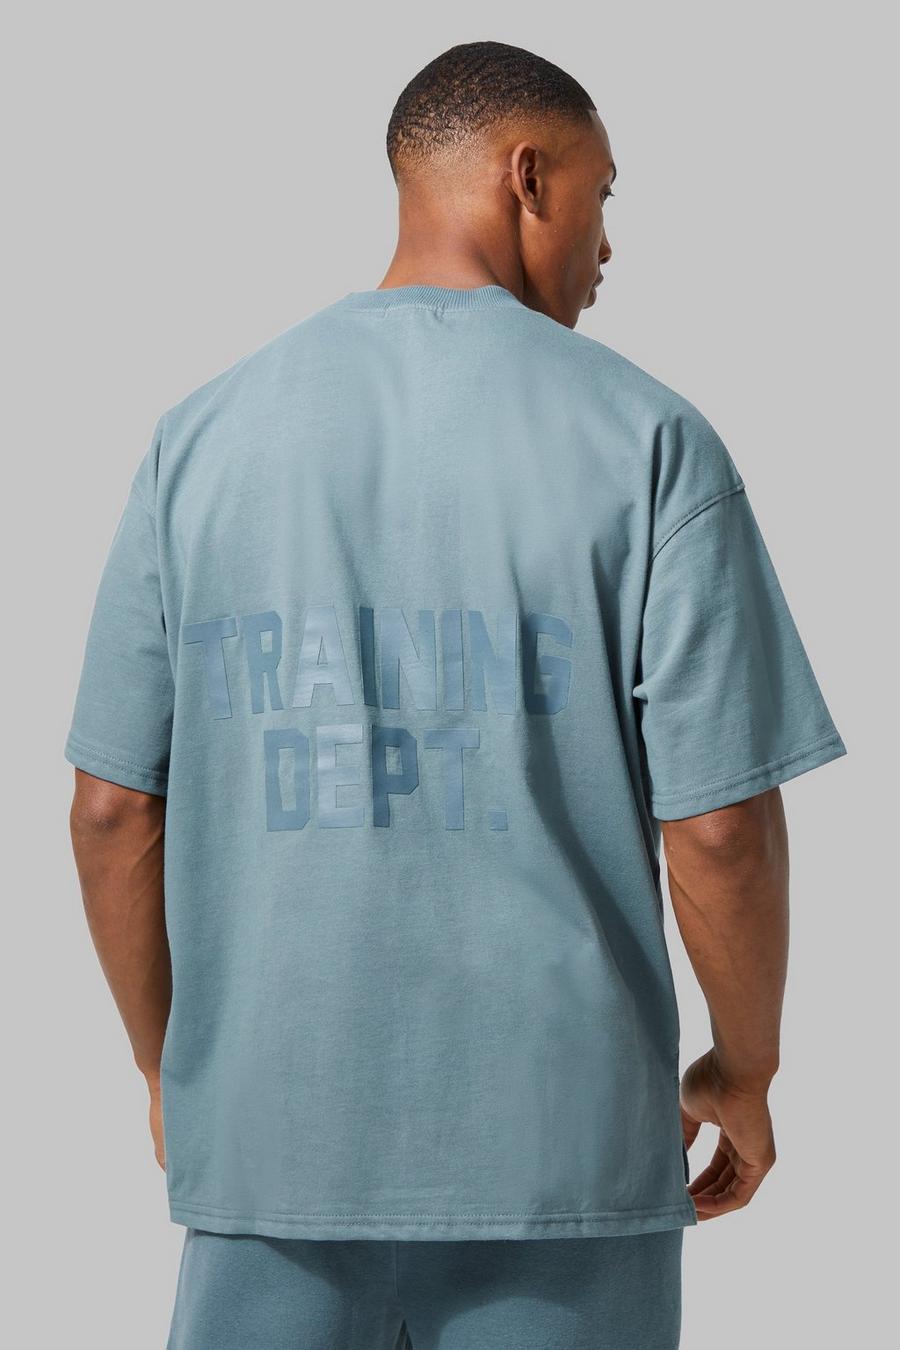 Slate blue Oversized Active Training Dept T-Shirt image number 1